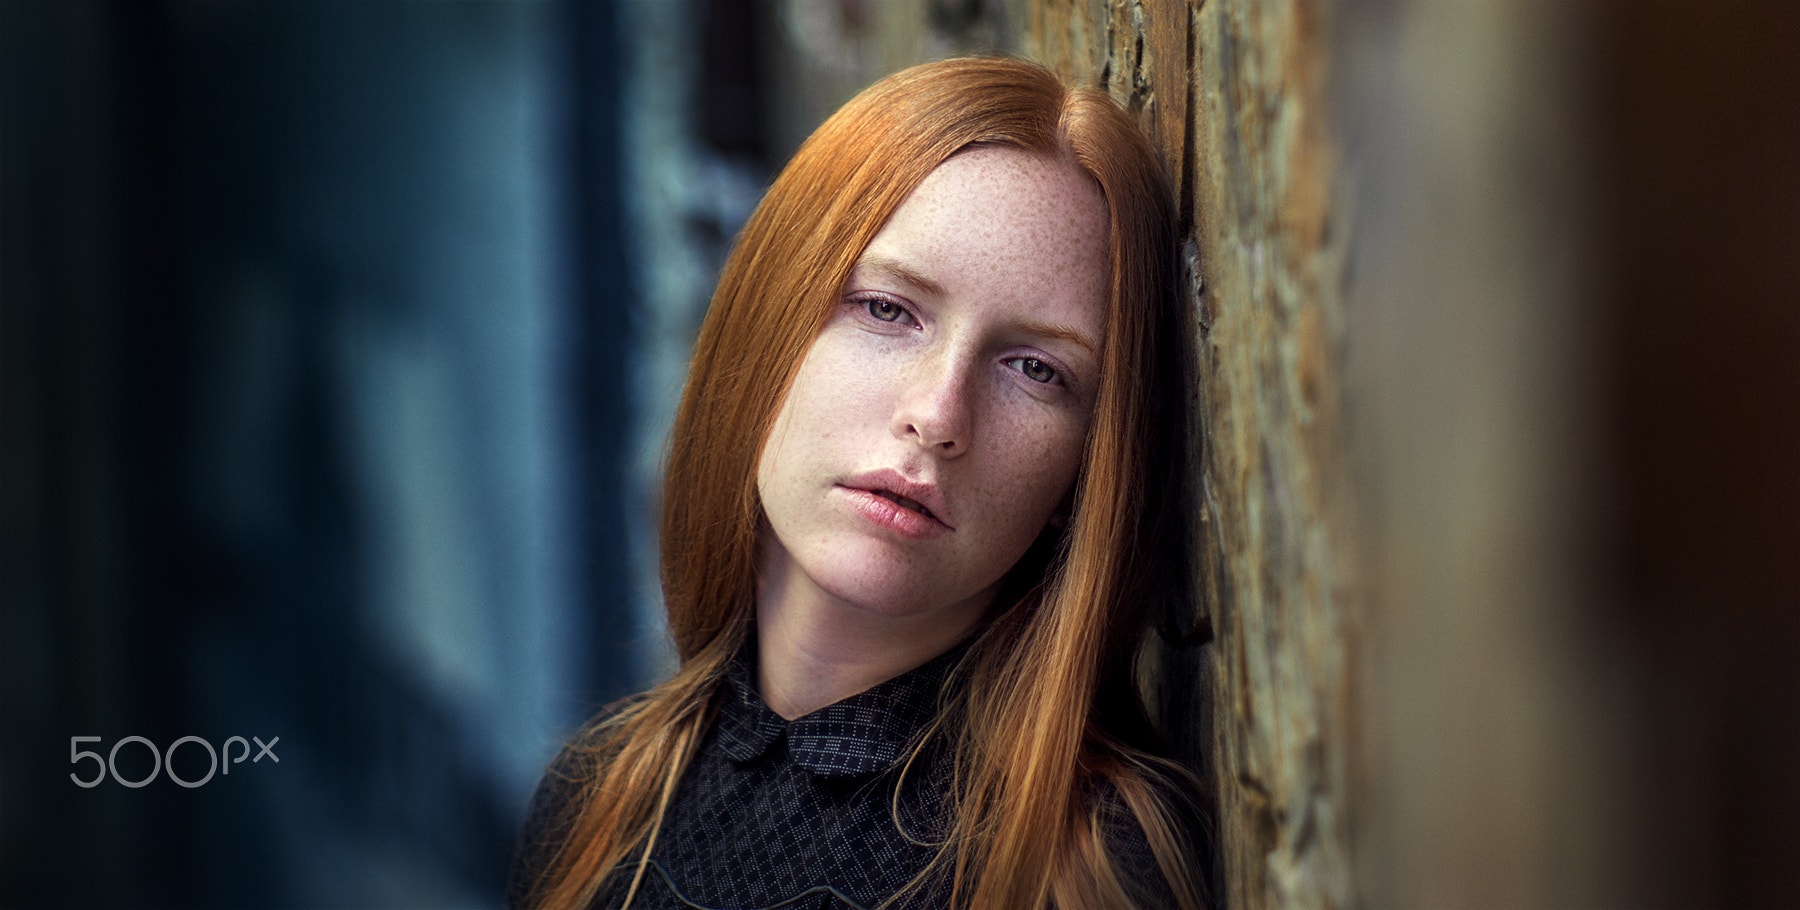 People 1800x910 Yuri Leo model women redhead freckles long hair closeup watermarked 500px